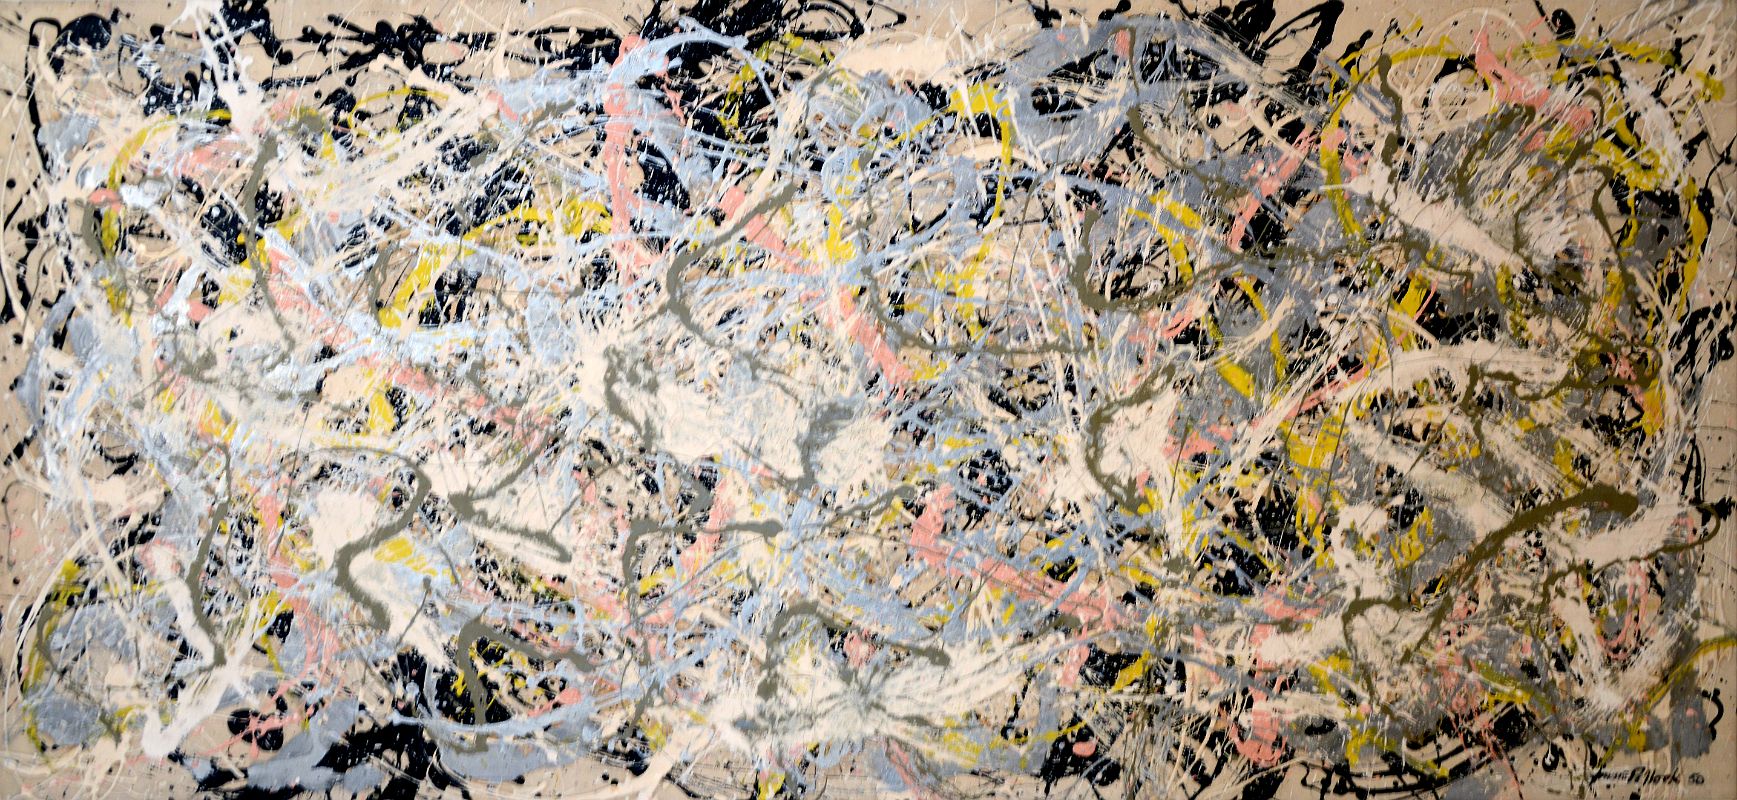 33 Number 27 - Jackson Pollock 1950 Whitney Museum Of American Art New York City